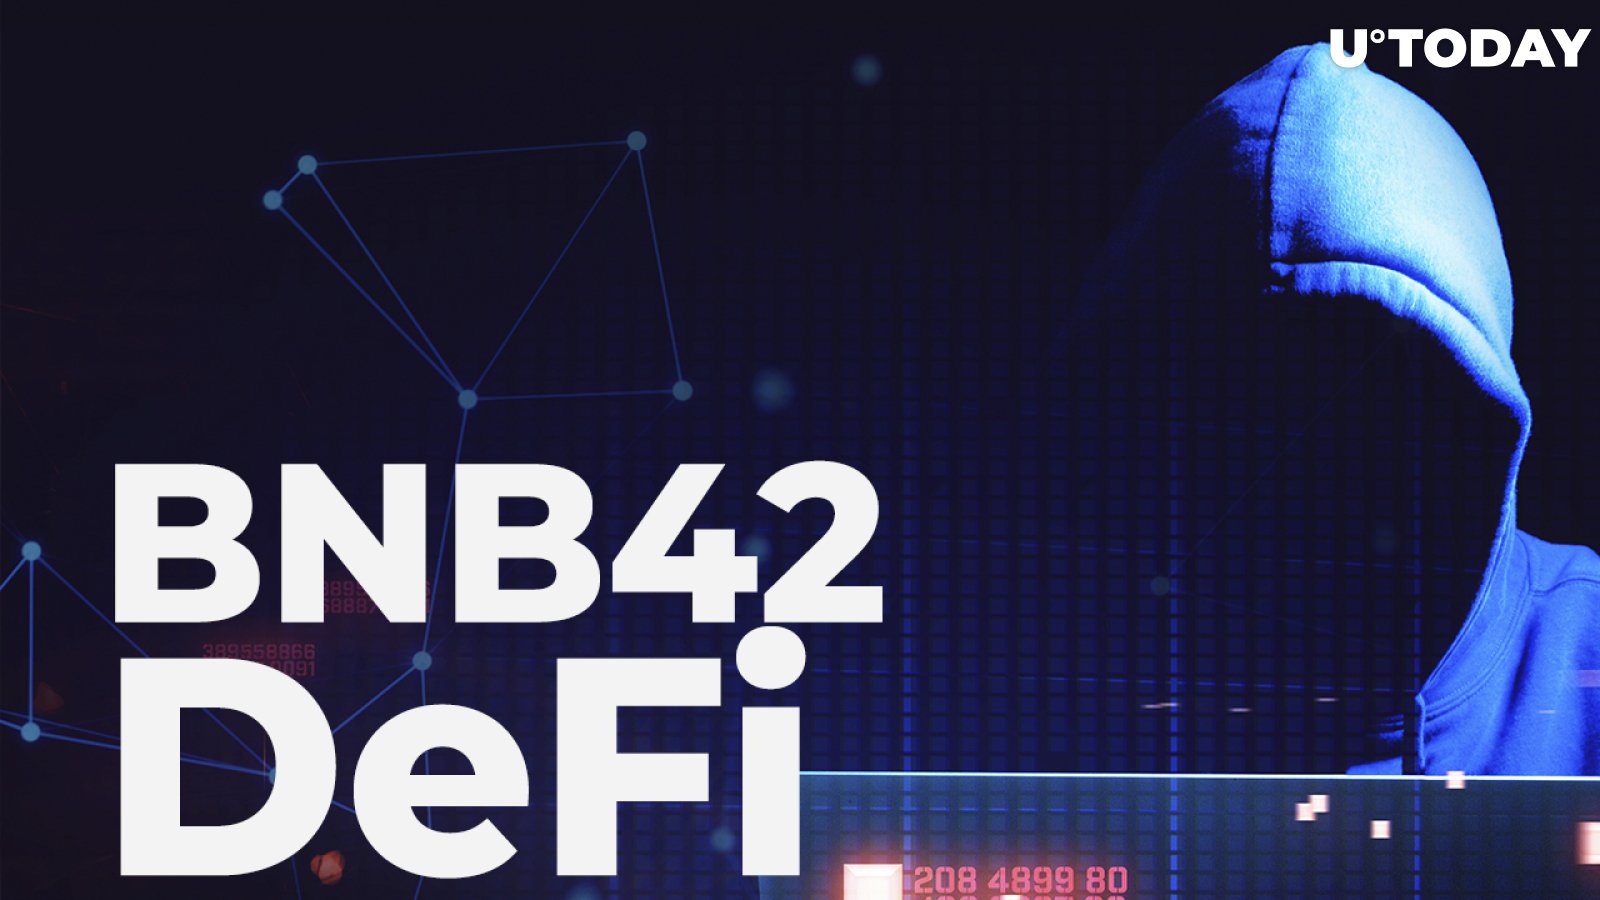 BNB42 DeFi Rugged for $2.8 Million, CetriK Explains How